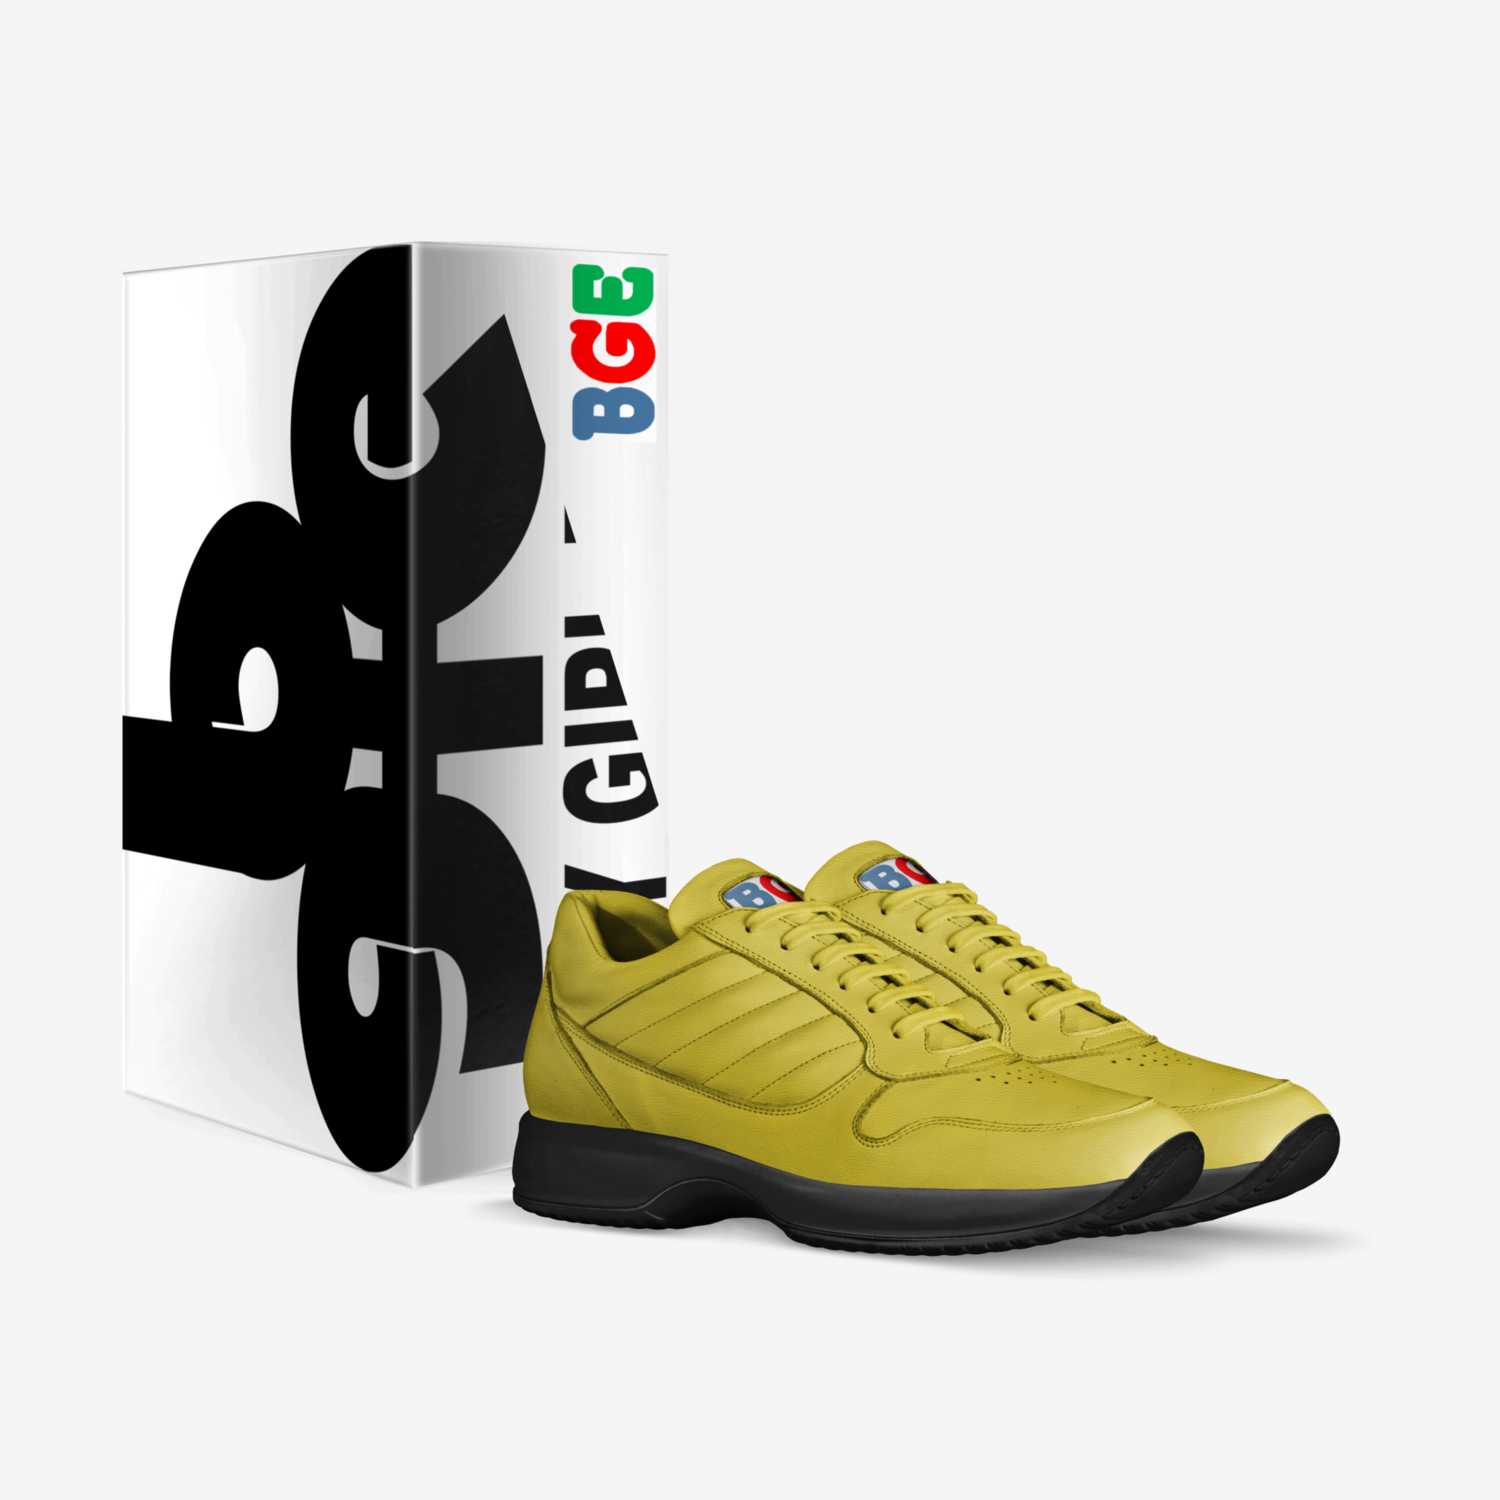 Yelo Adagio custom made in Italy shoes by Krishan Myrick | Box view